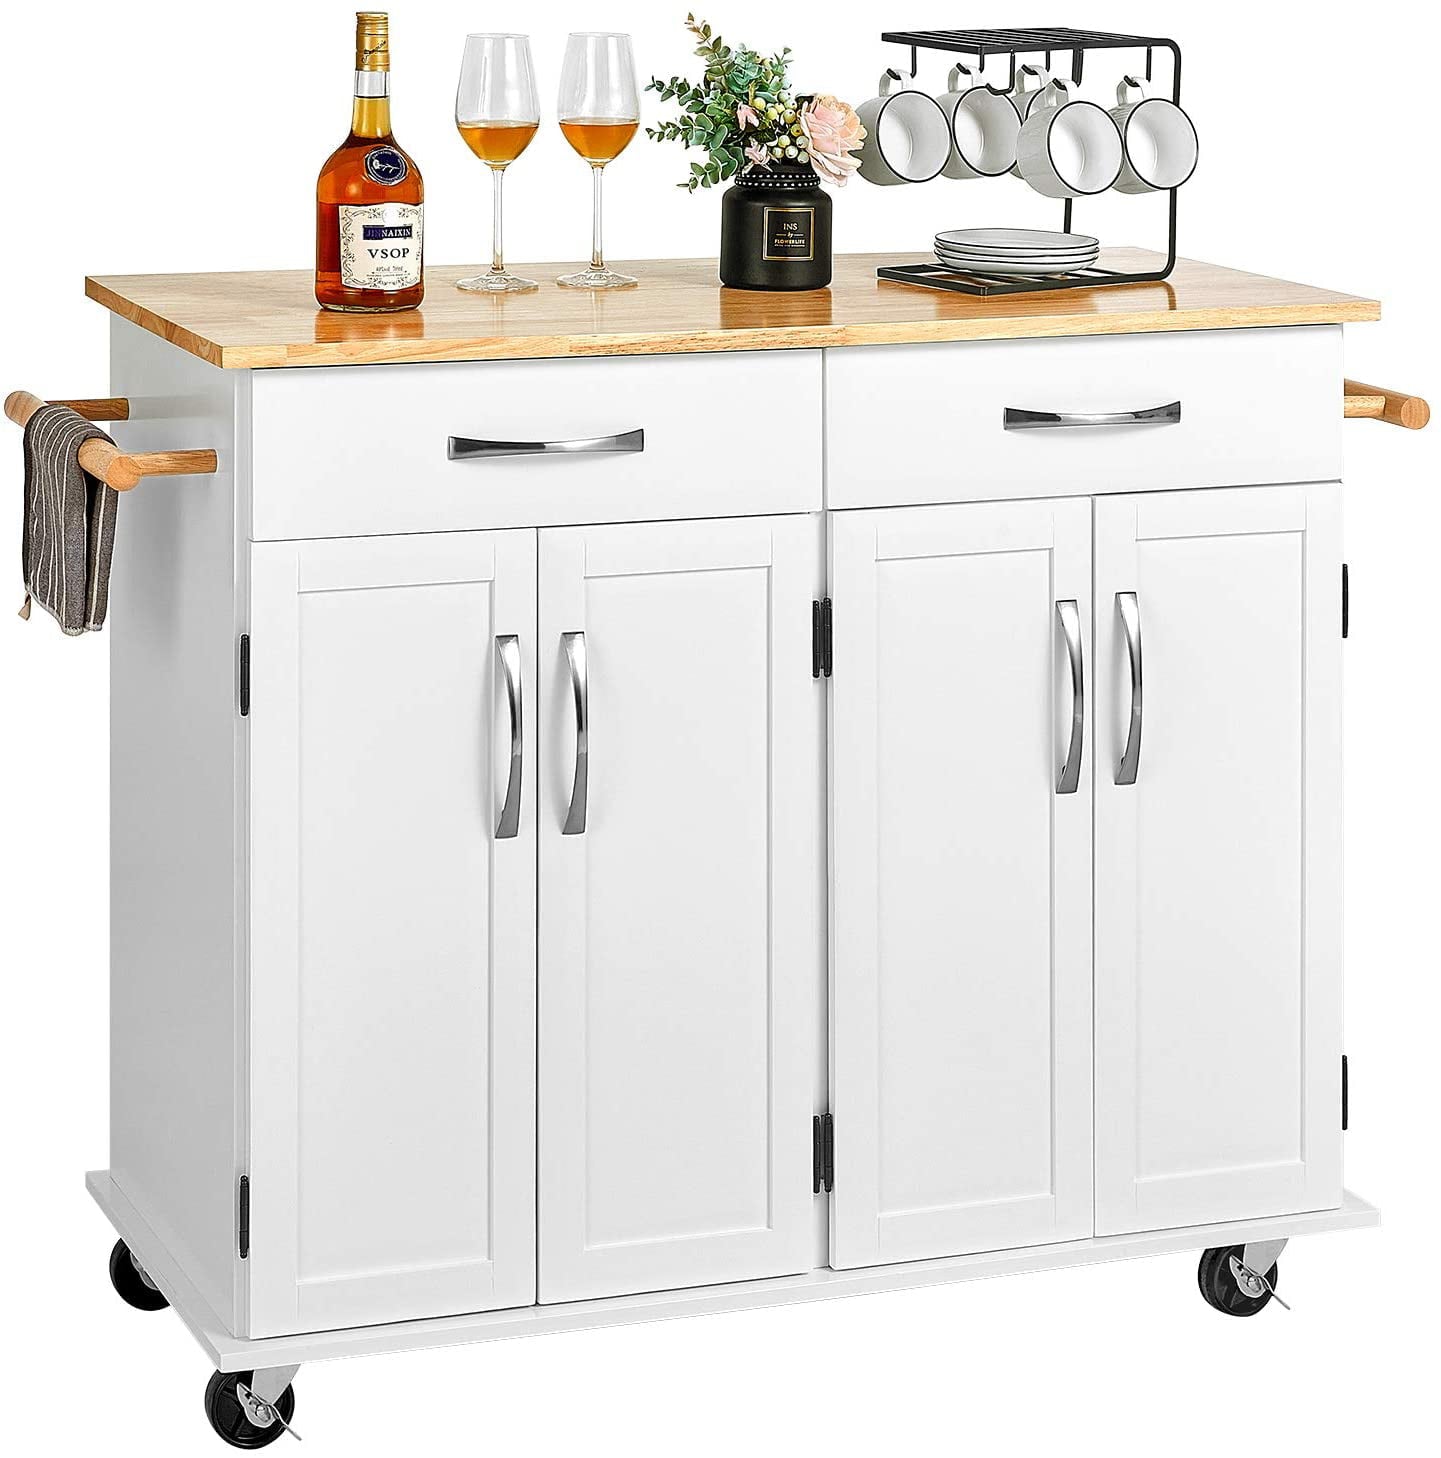 CINAK Rolling Kitchen Island Cart with Storage， Kitchen Island on Wheels， Handle Rack Rubber Wood Top Cabinet， Ivory White， 48.2L x 18.5W x 35.4H